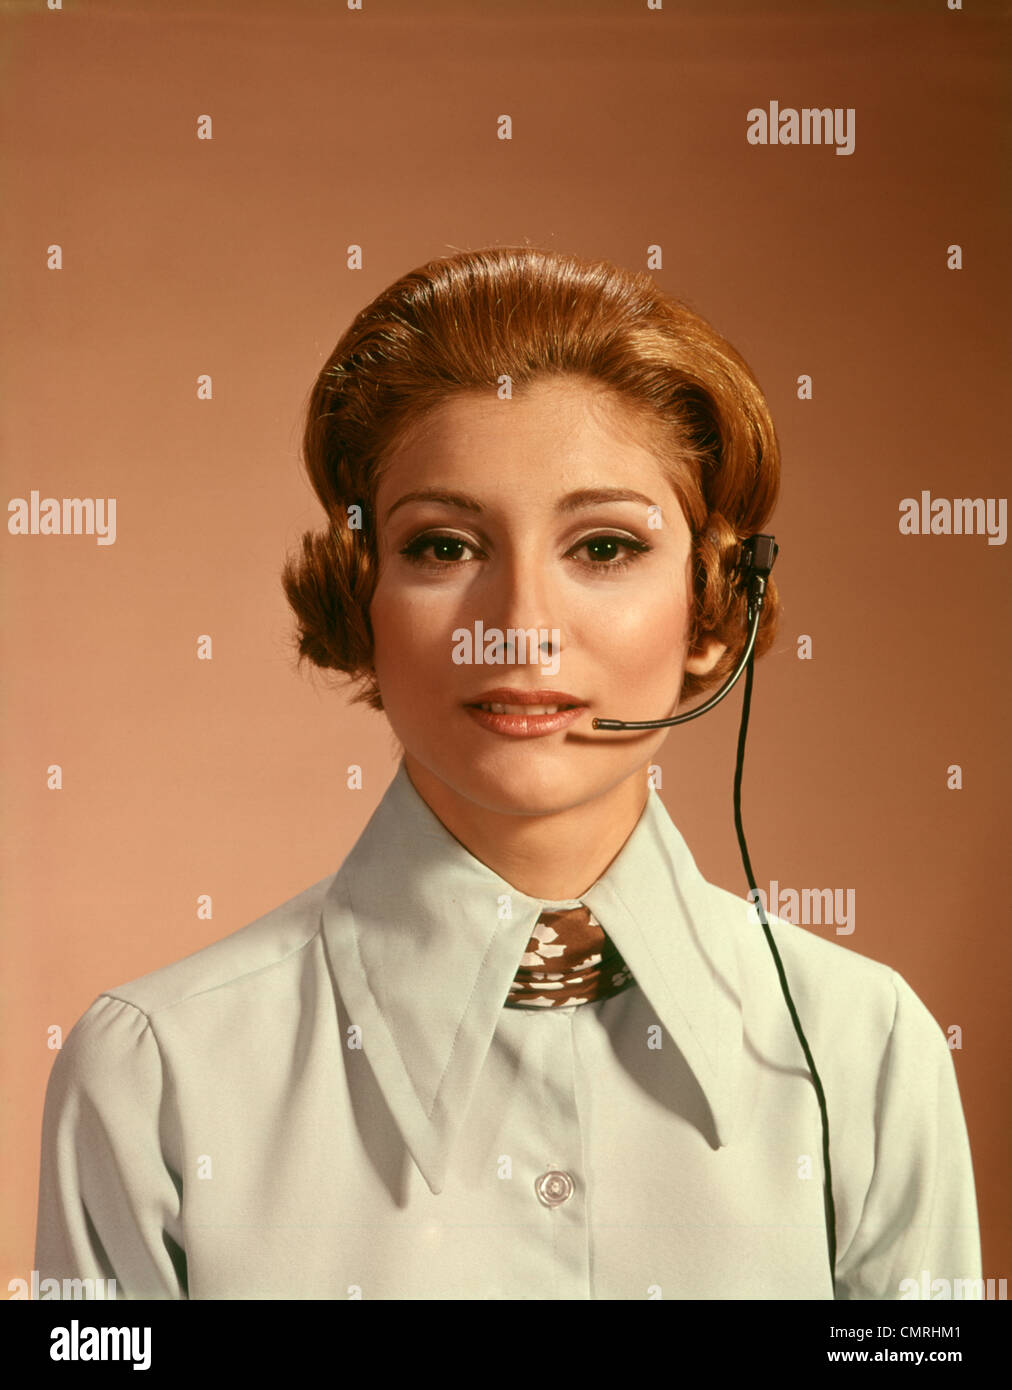 1960s 1970s PORTRAIT WOMAN TELEPHONE OPERATOR RECEPTIONIST OFFICE WORKER WEARING HEADSET Stock Photo